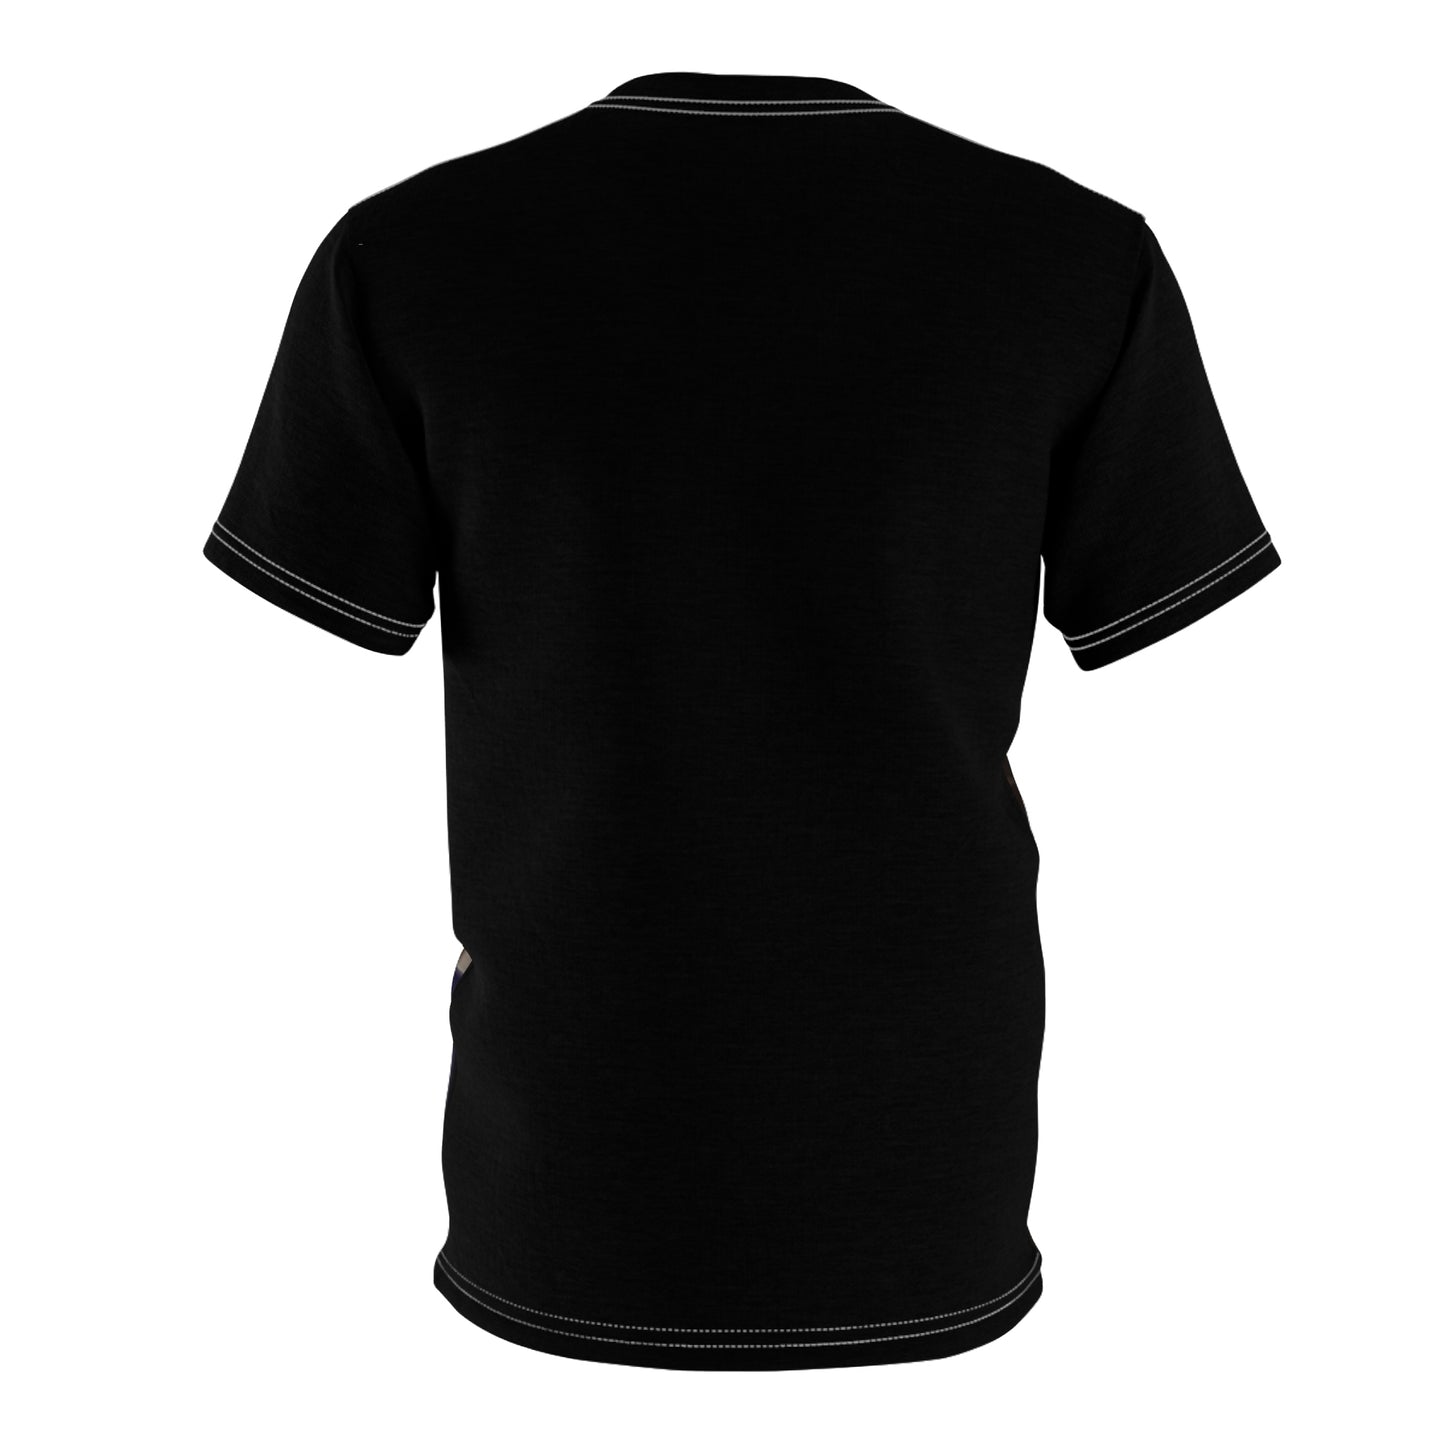 Mastermind - Unisex All-Over Print Cut & Sew T-Shirt